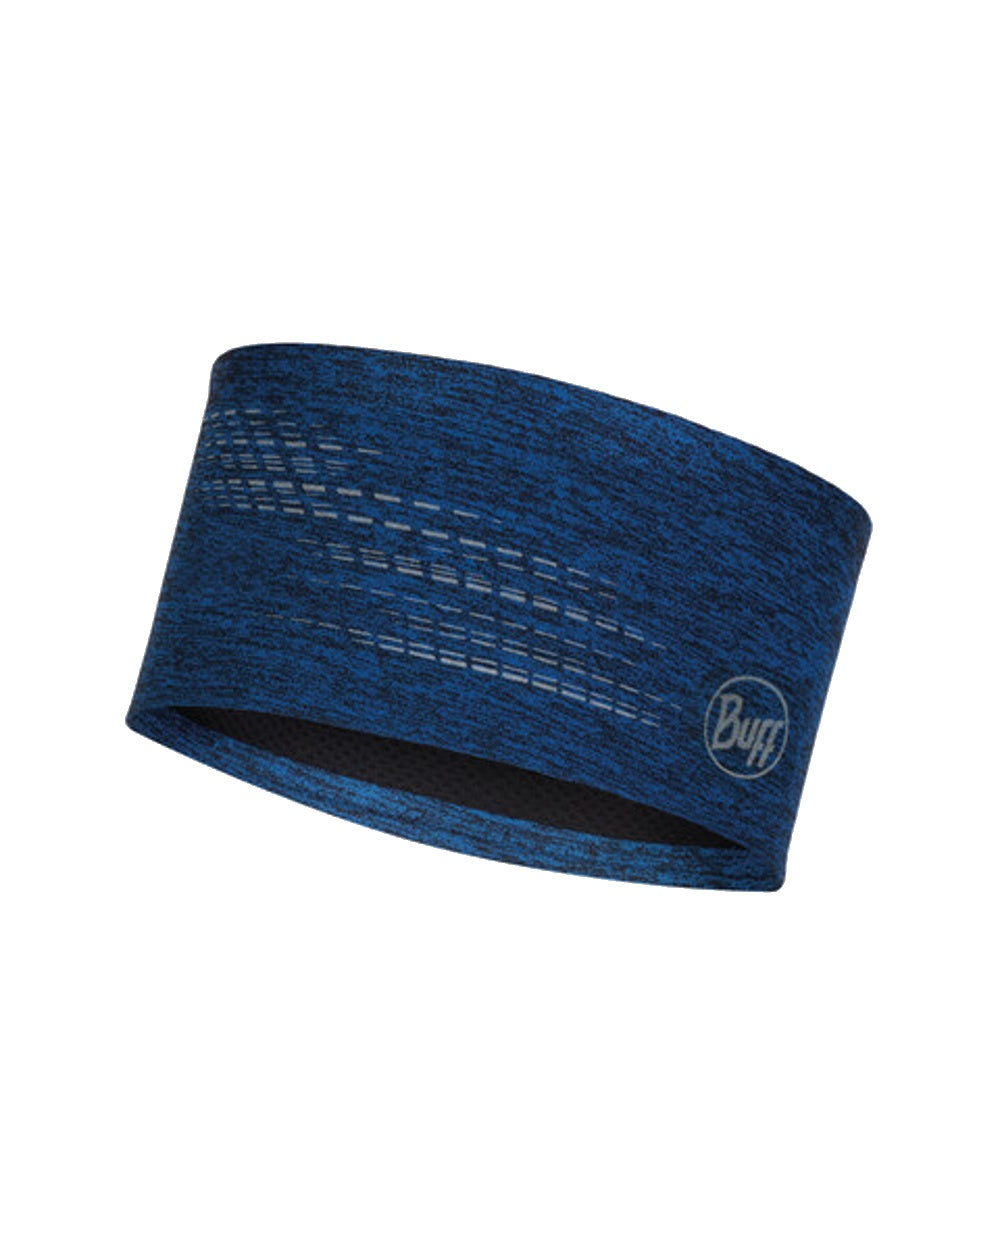 Buff DryFlx Headband in Blue 